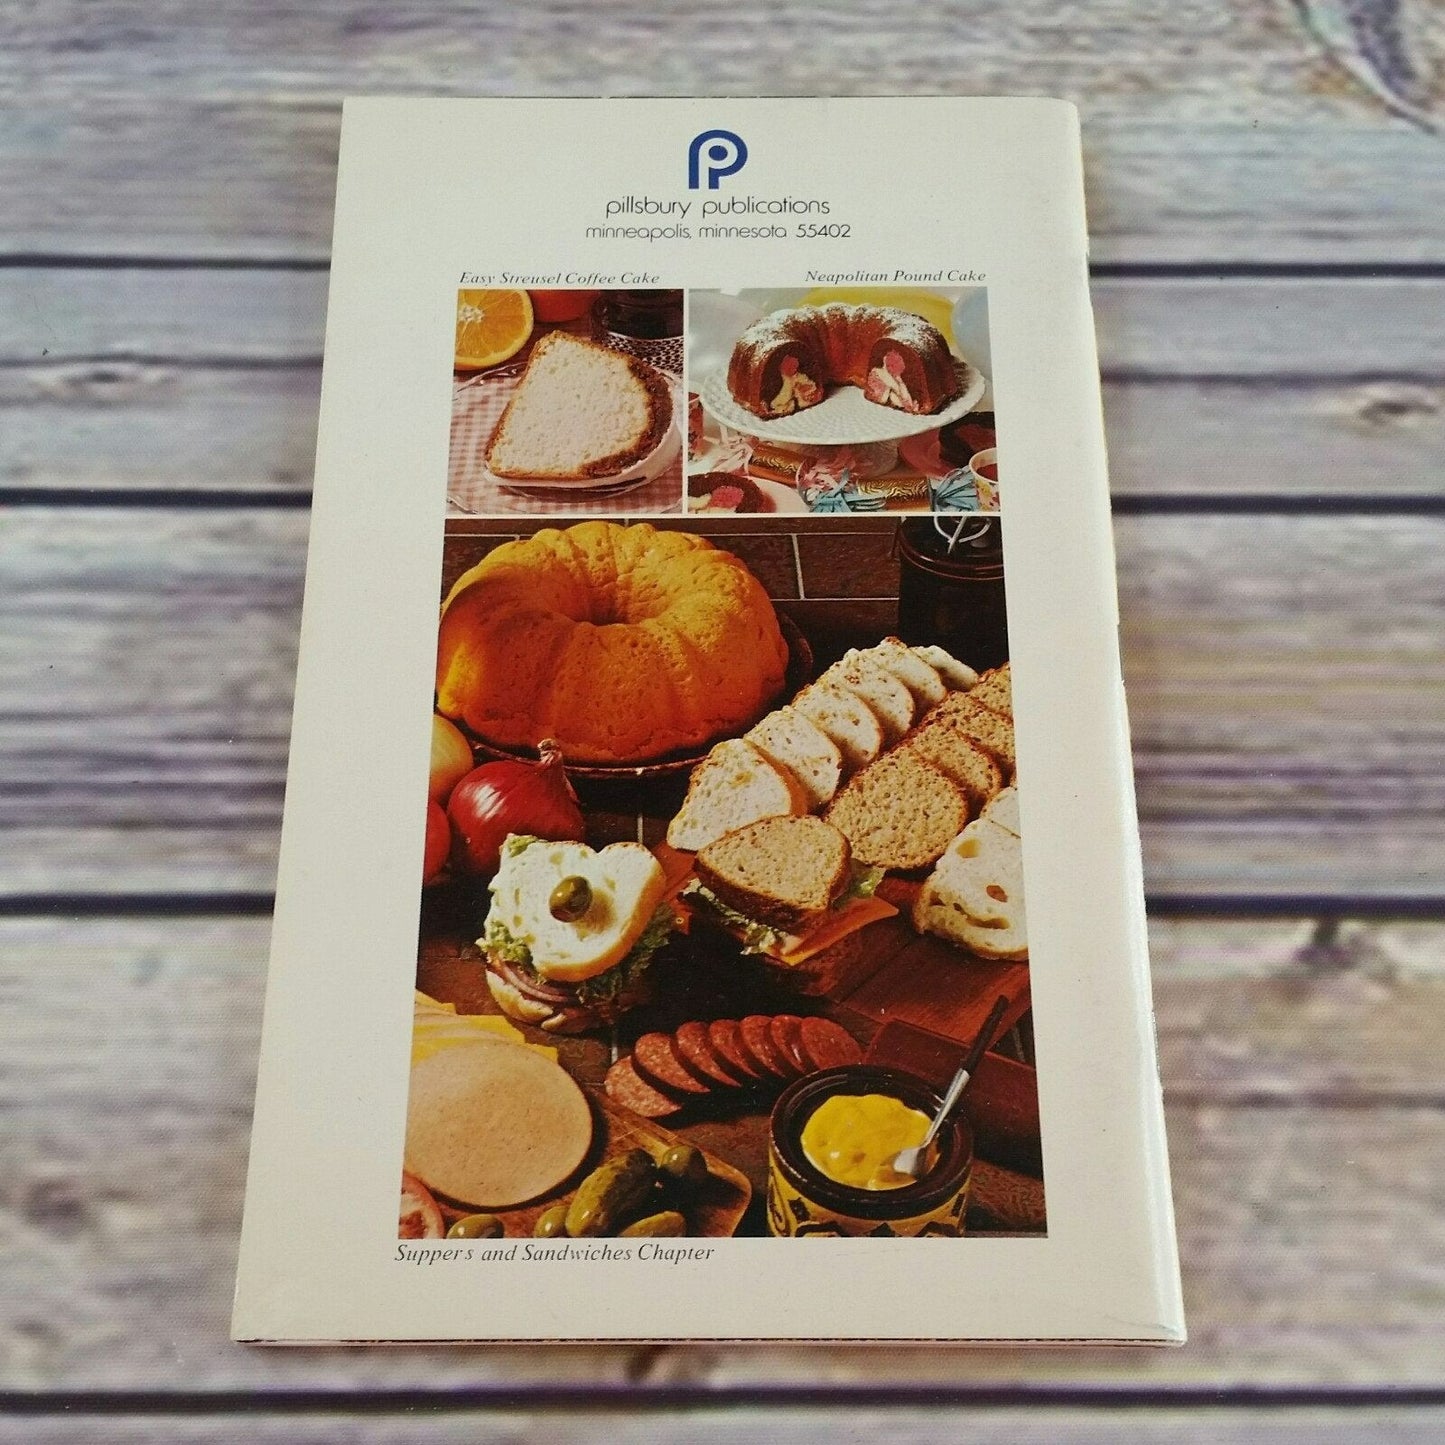 Vintage Cookbook Pillsbury Best Bundt Recipes Paperback Booklet 1974 Pamphlet 100 Bread and Cake Recipes Fluted Tube Pan